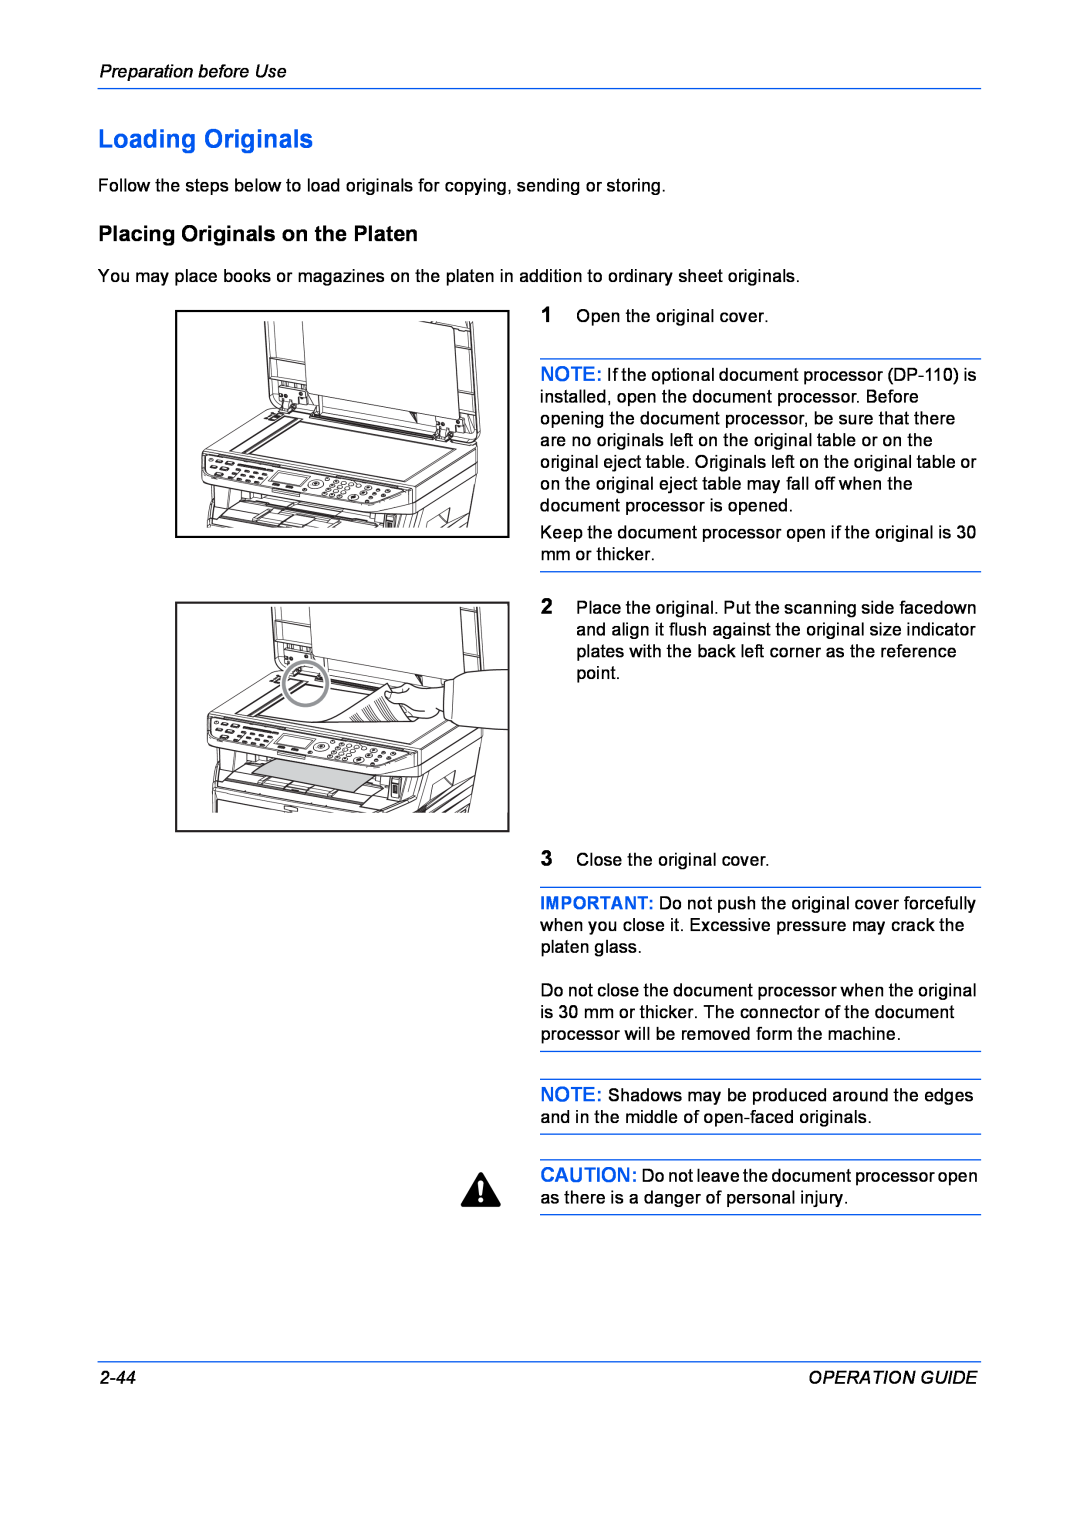 Kyocera FS-1028MFP manual Loading Originals, Placing Originals on the Platen, Preparation before Use, 2-44, Operation Guide 